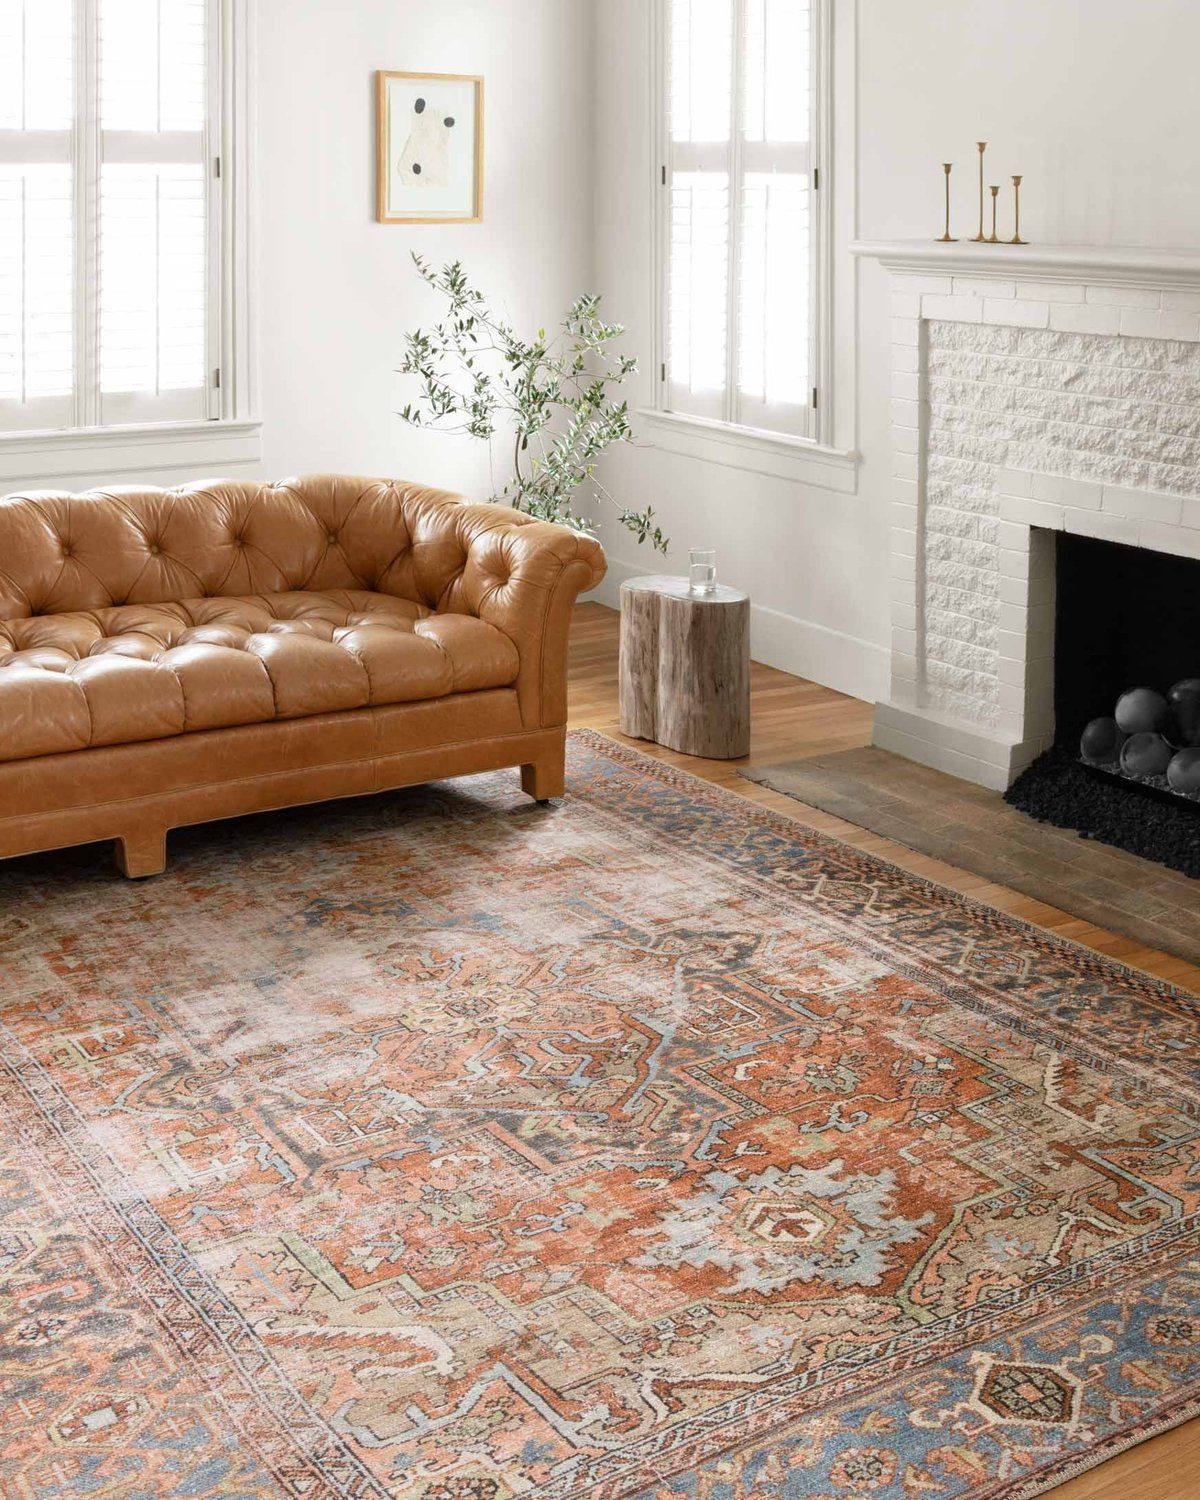 Design Home Helped Me My Rug, Living Room Persian Rug Interior Design